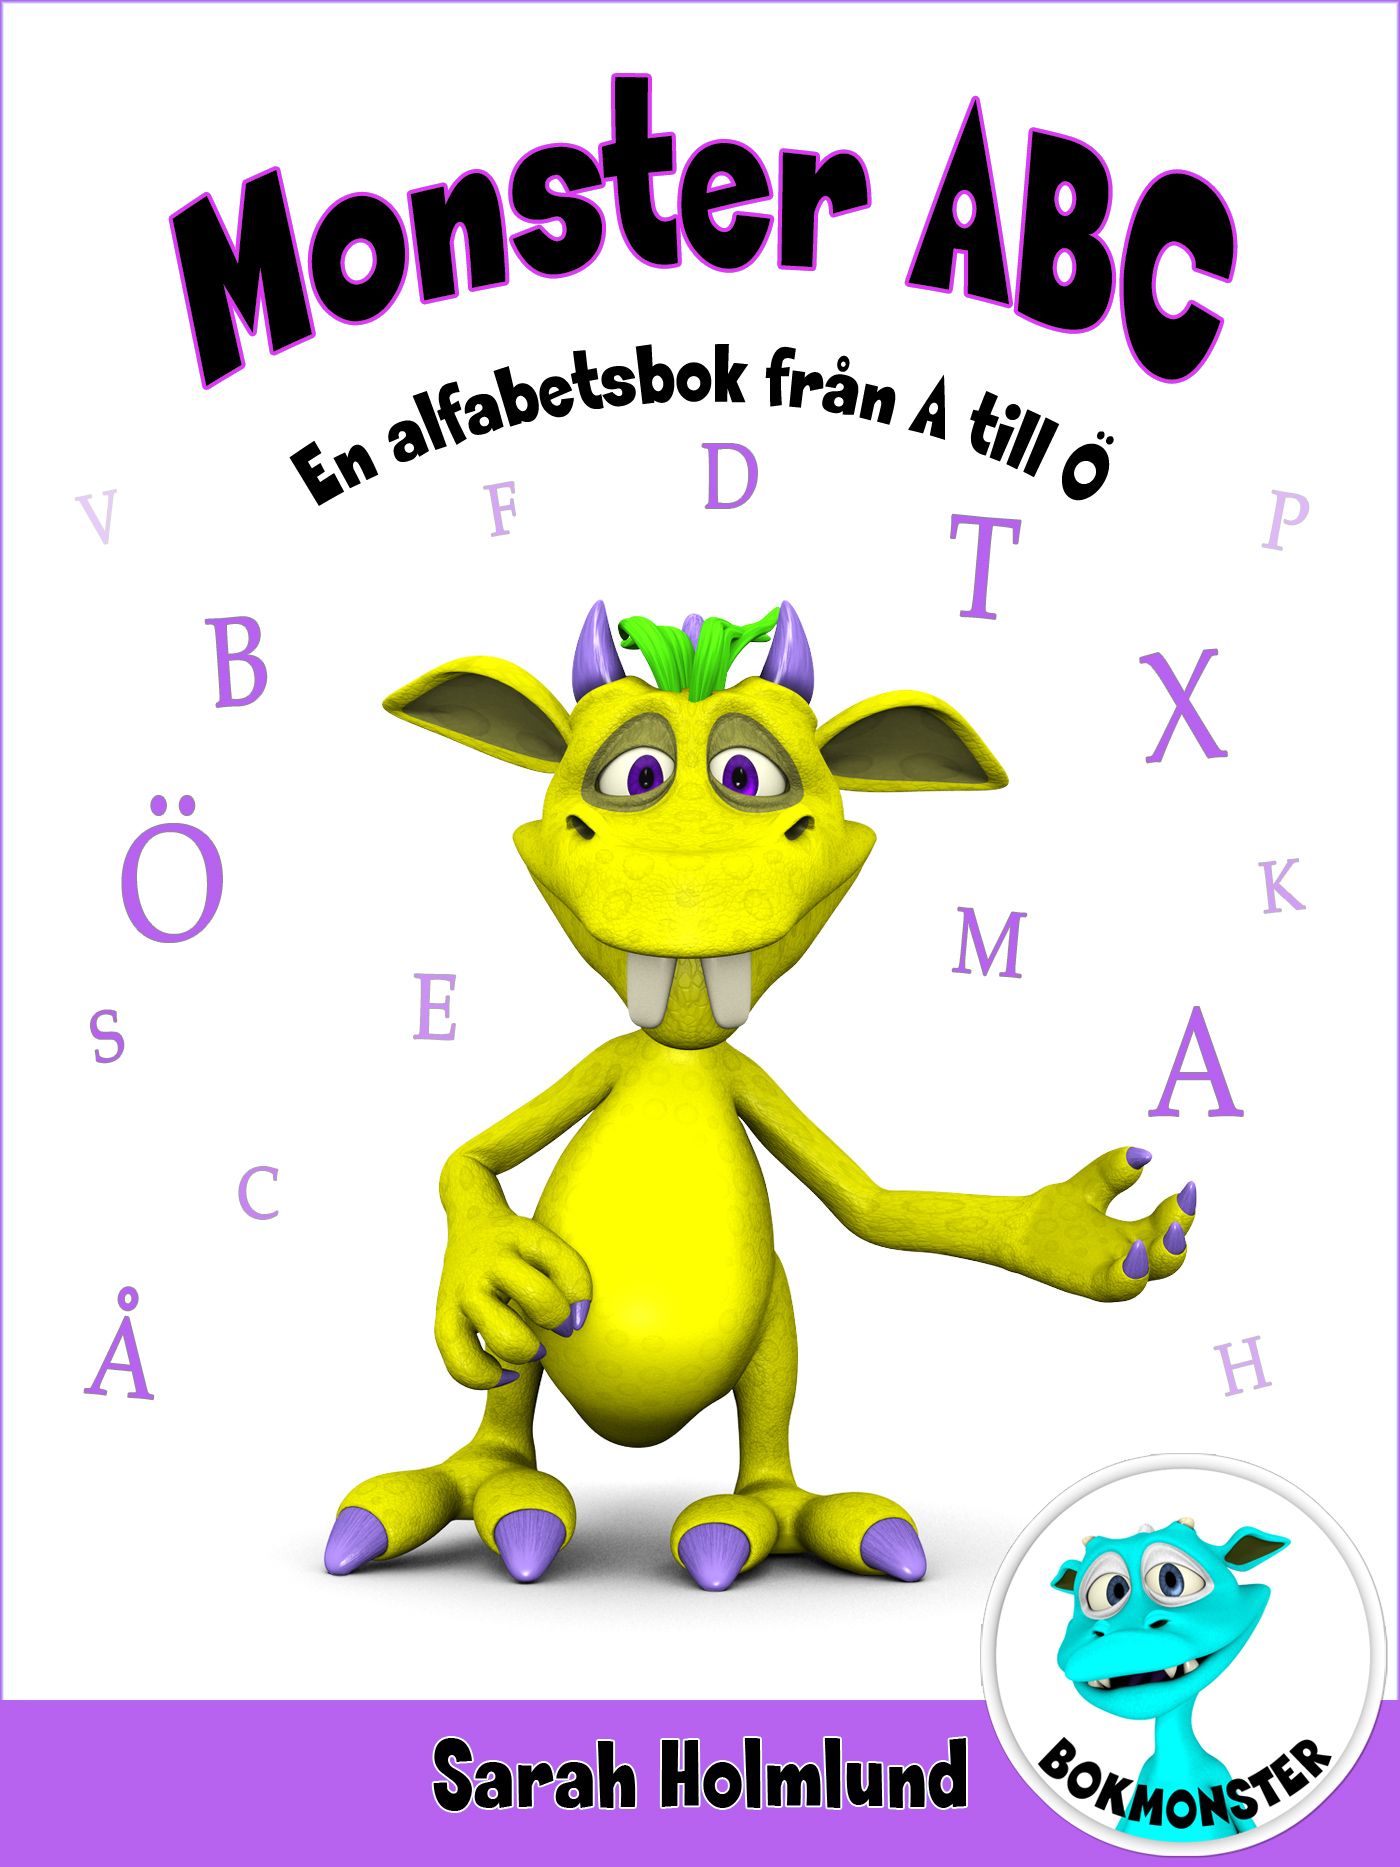 Monster ABC. En alfabetsbok från A till Ö, eBook by Sarah Holmlund